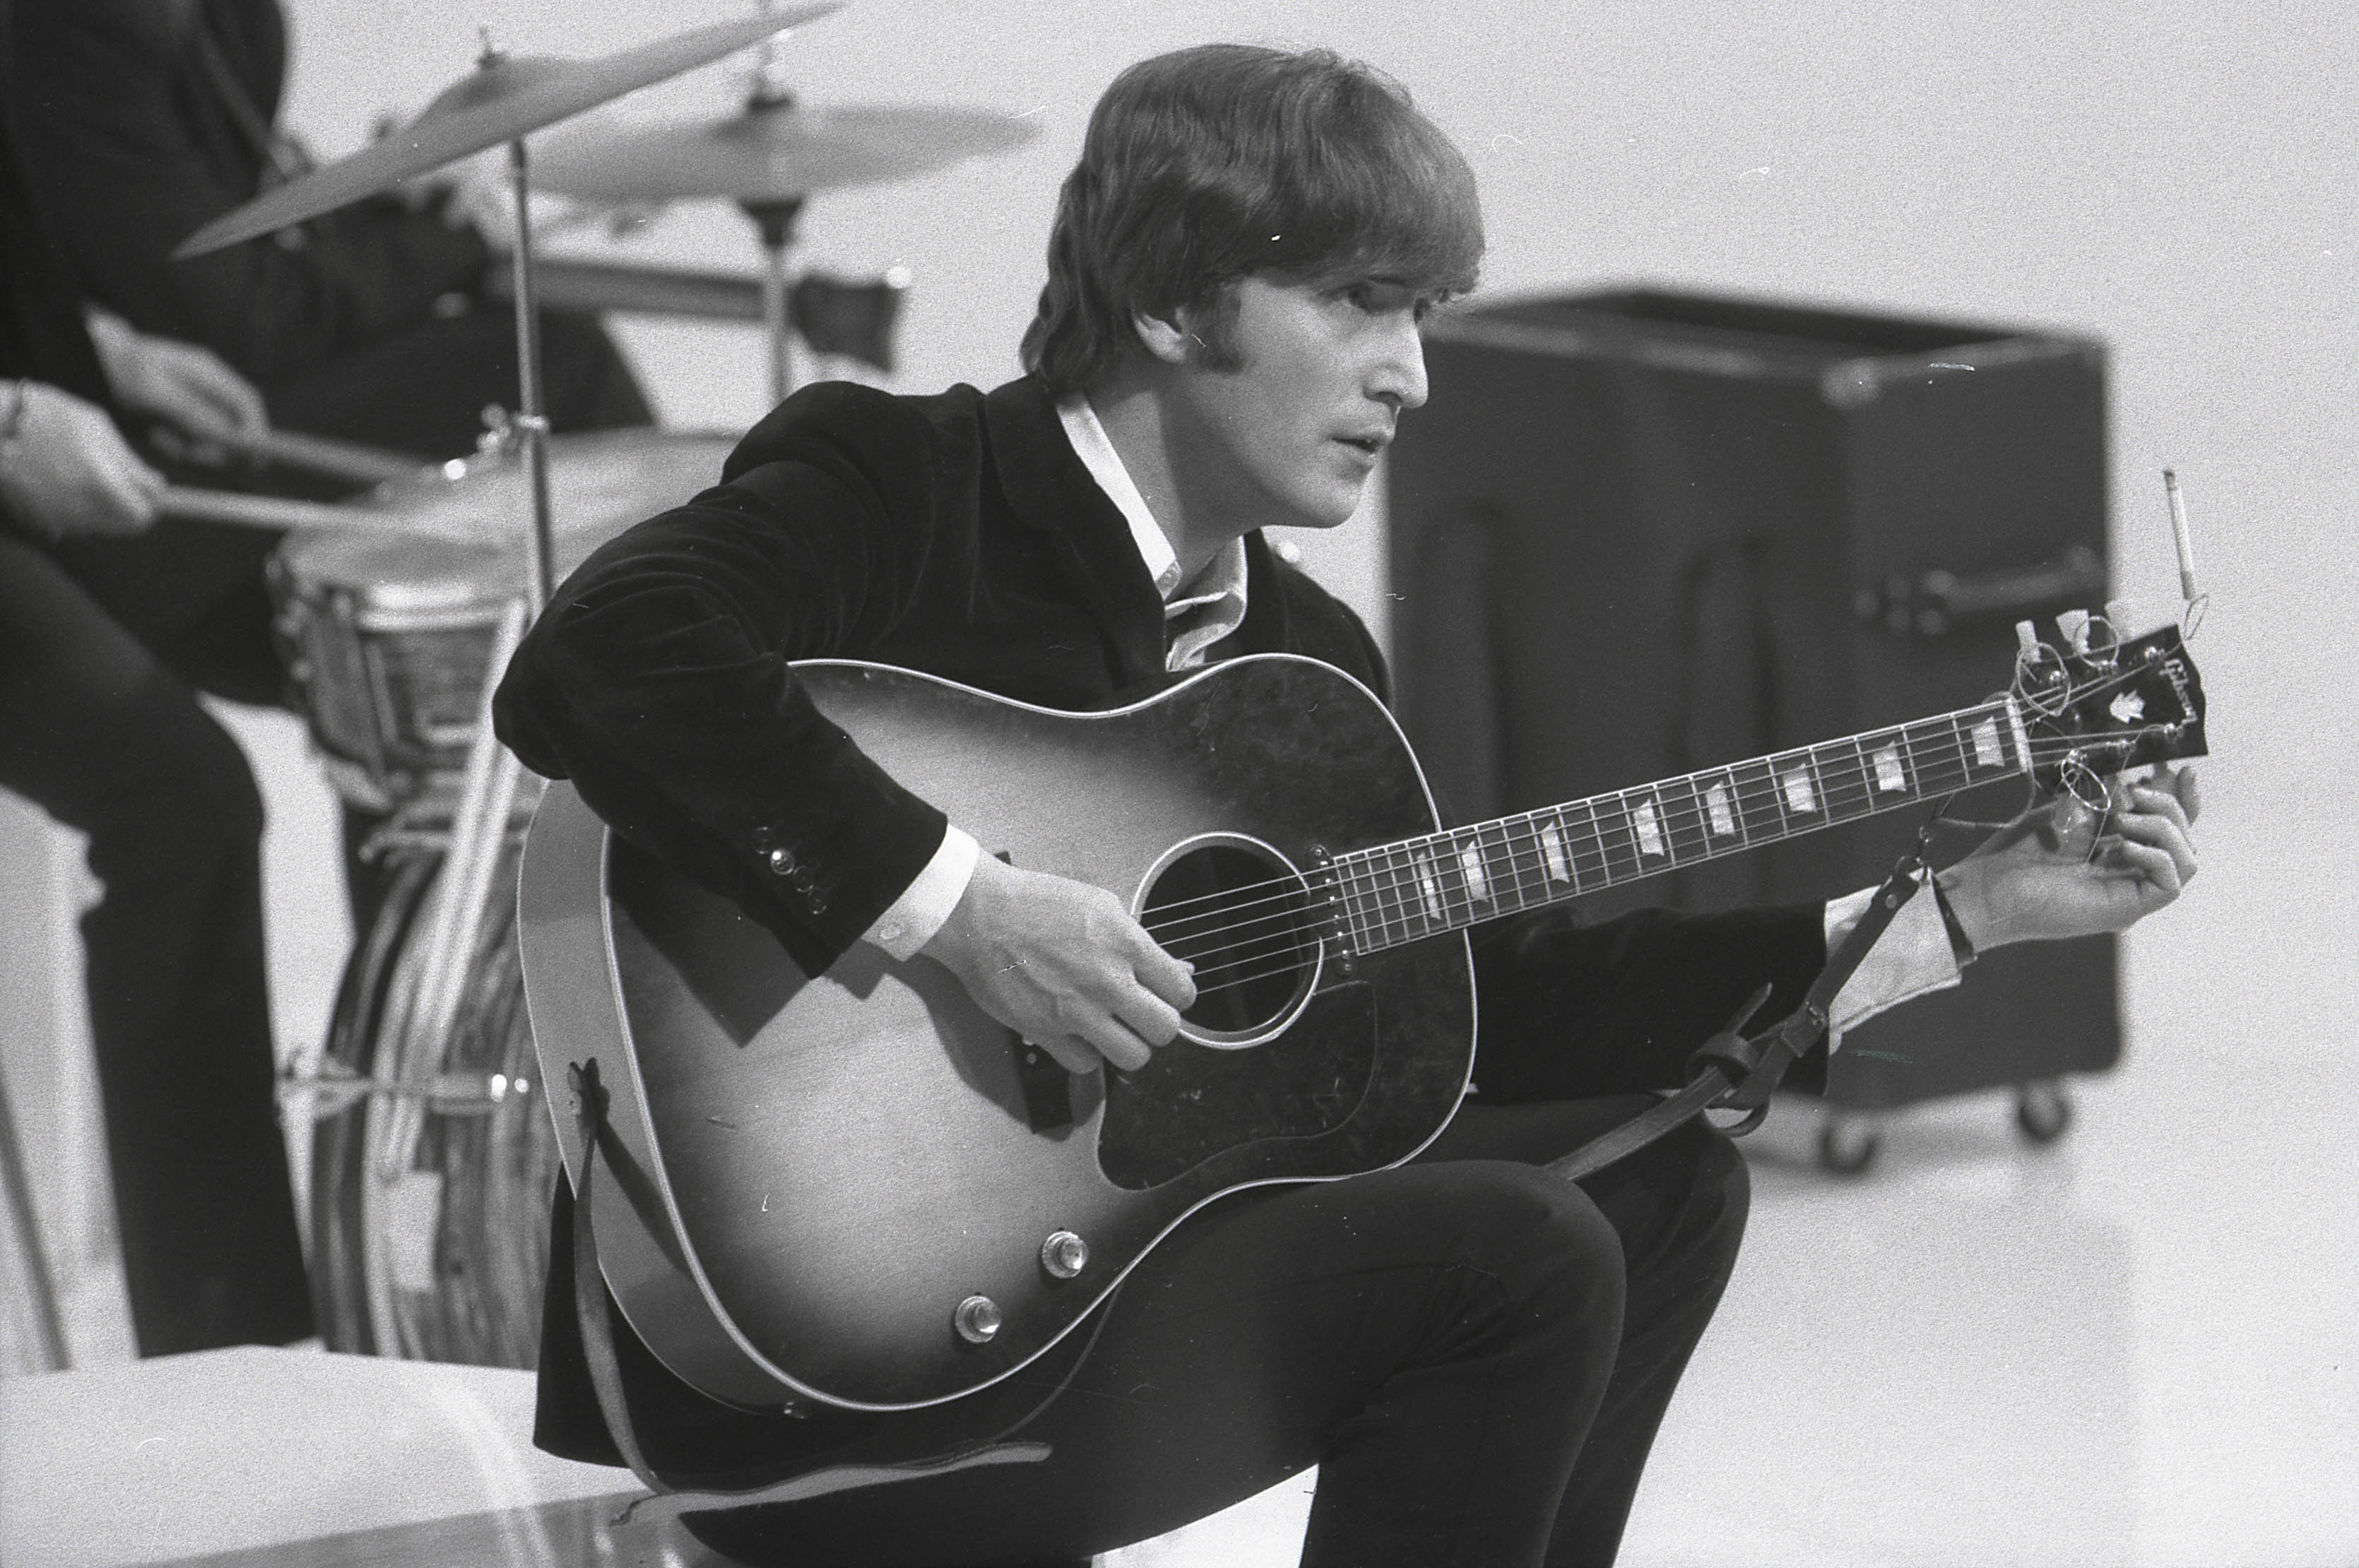 John Lennon holding a guitar while sitting